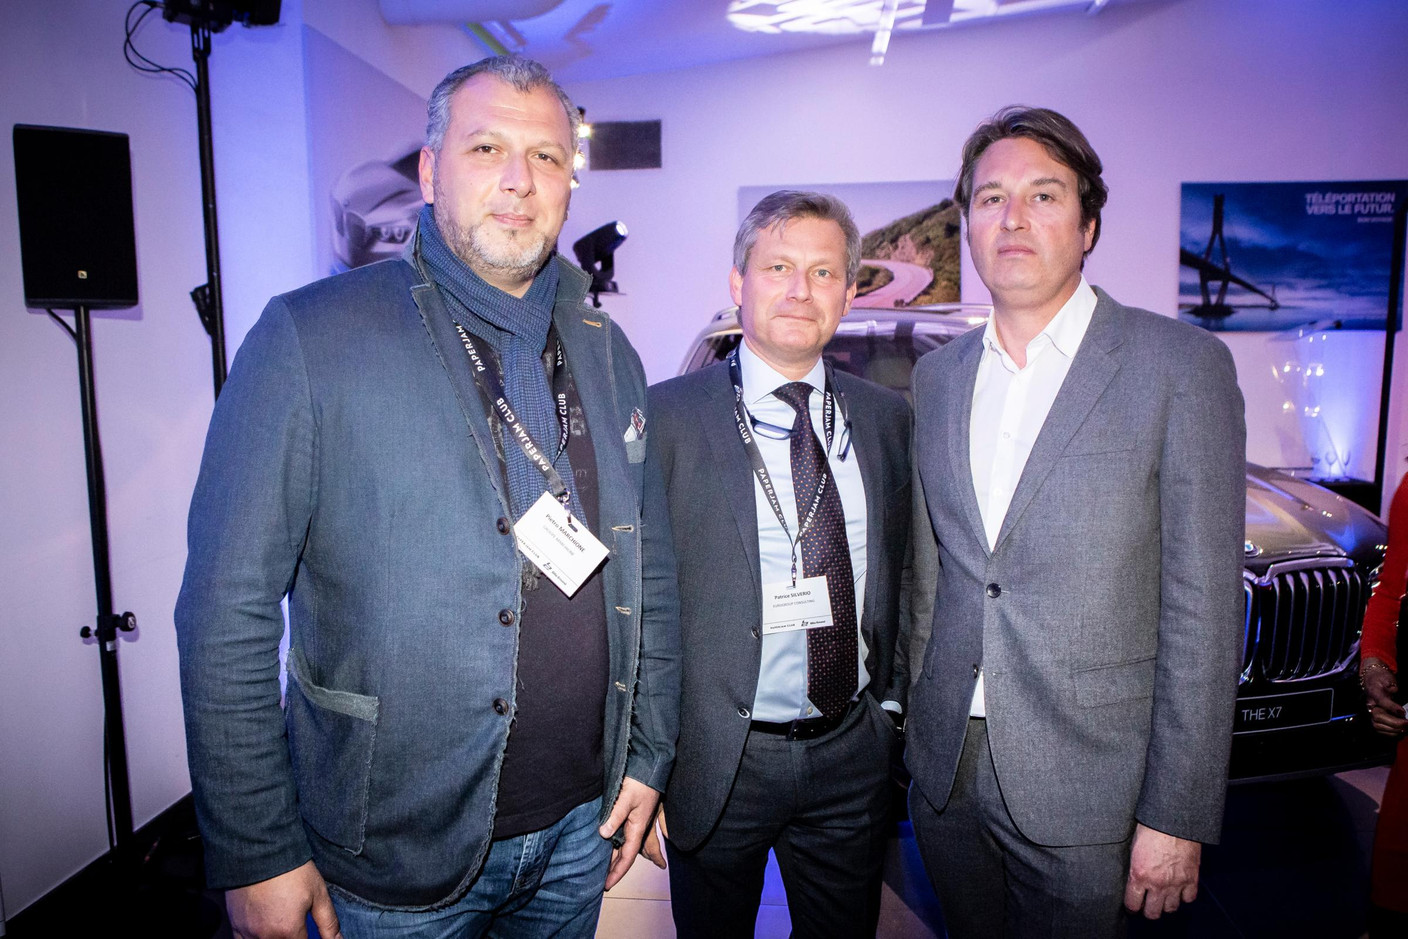 Pietro Marchione (Groupe Marchione), Patrice Silverio (Eurogroup Consulting) et Laurent Goffin (Maison Moderne) (Photo: Jan Hanrion/Maison Moderne)